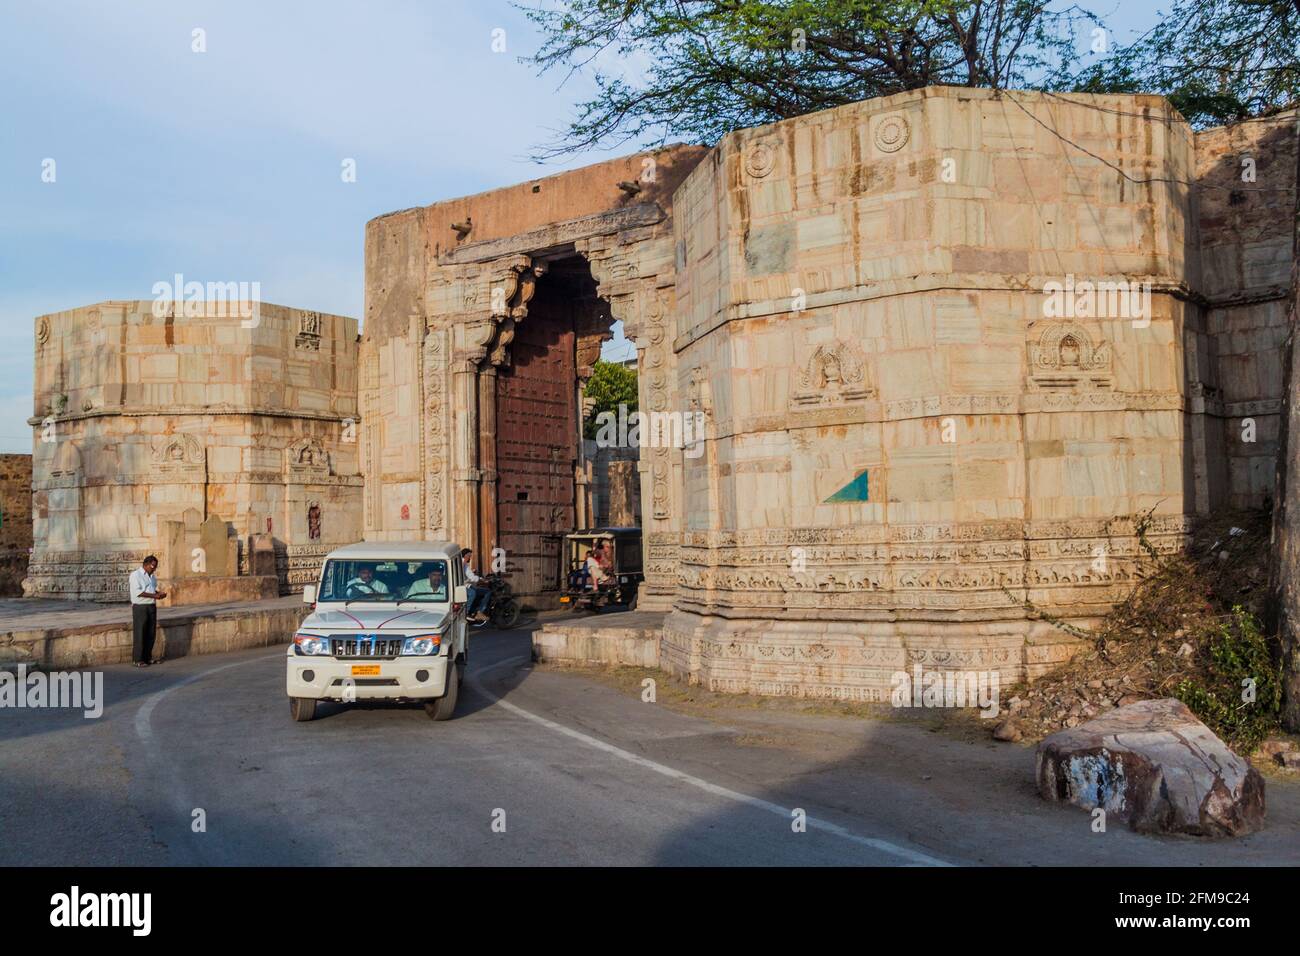 CHITTORGARH, INDIA - FEBRUARY 15, 2017: Ram Pol gate of Chittor Fort in Chittorgarh, Rajasthan state, India Stock Photo